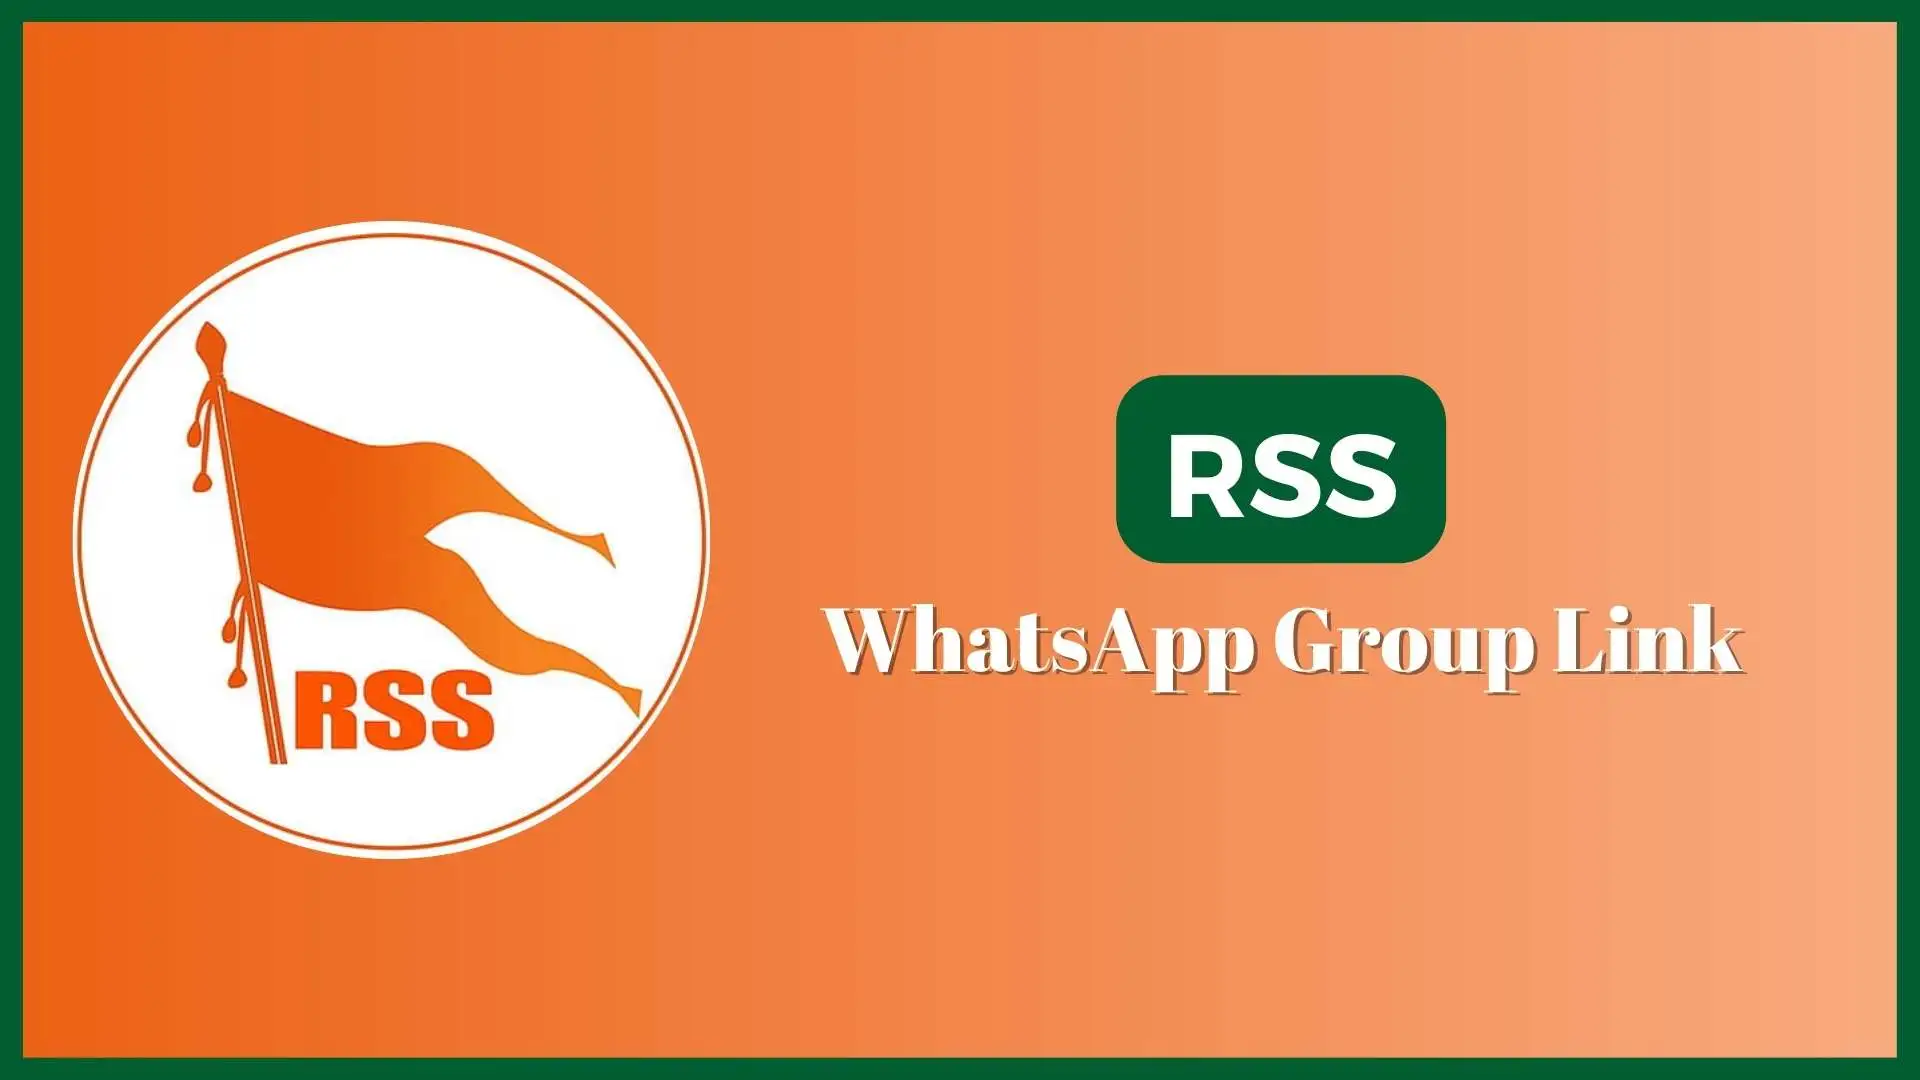 RSS WhatsApp Group Link